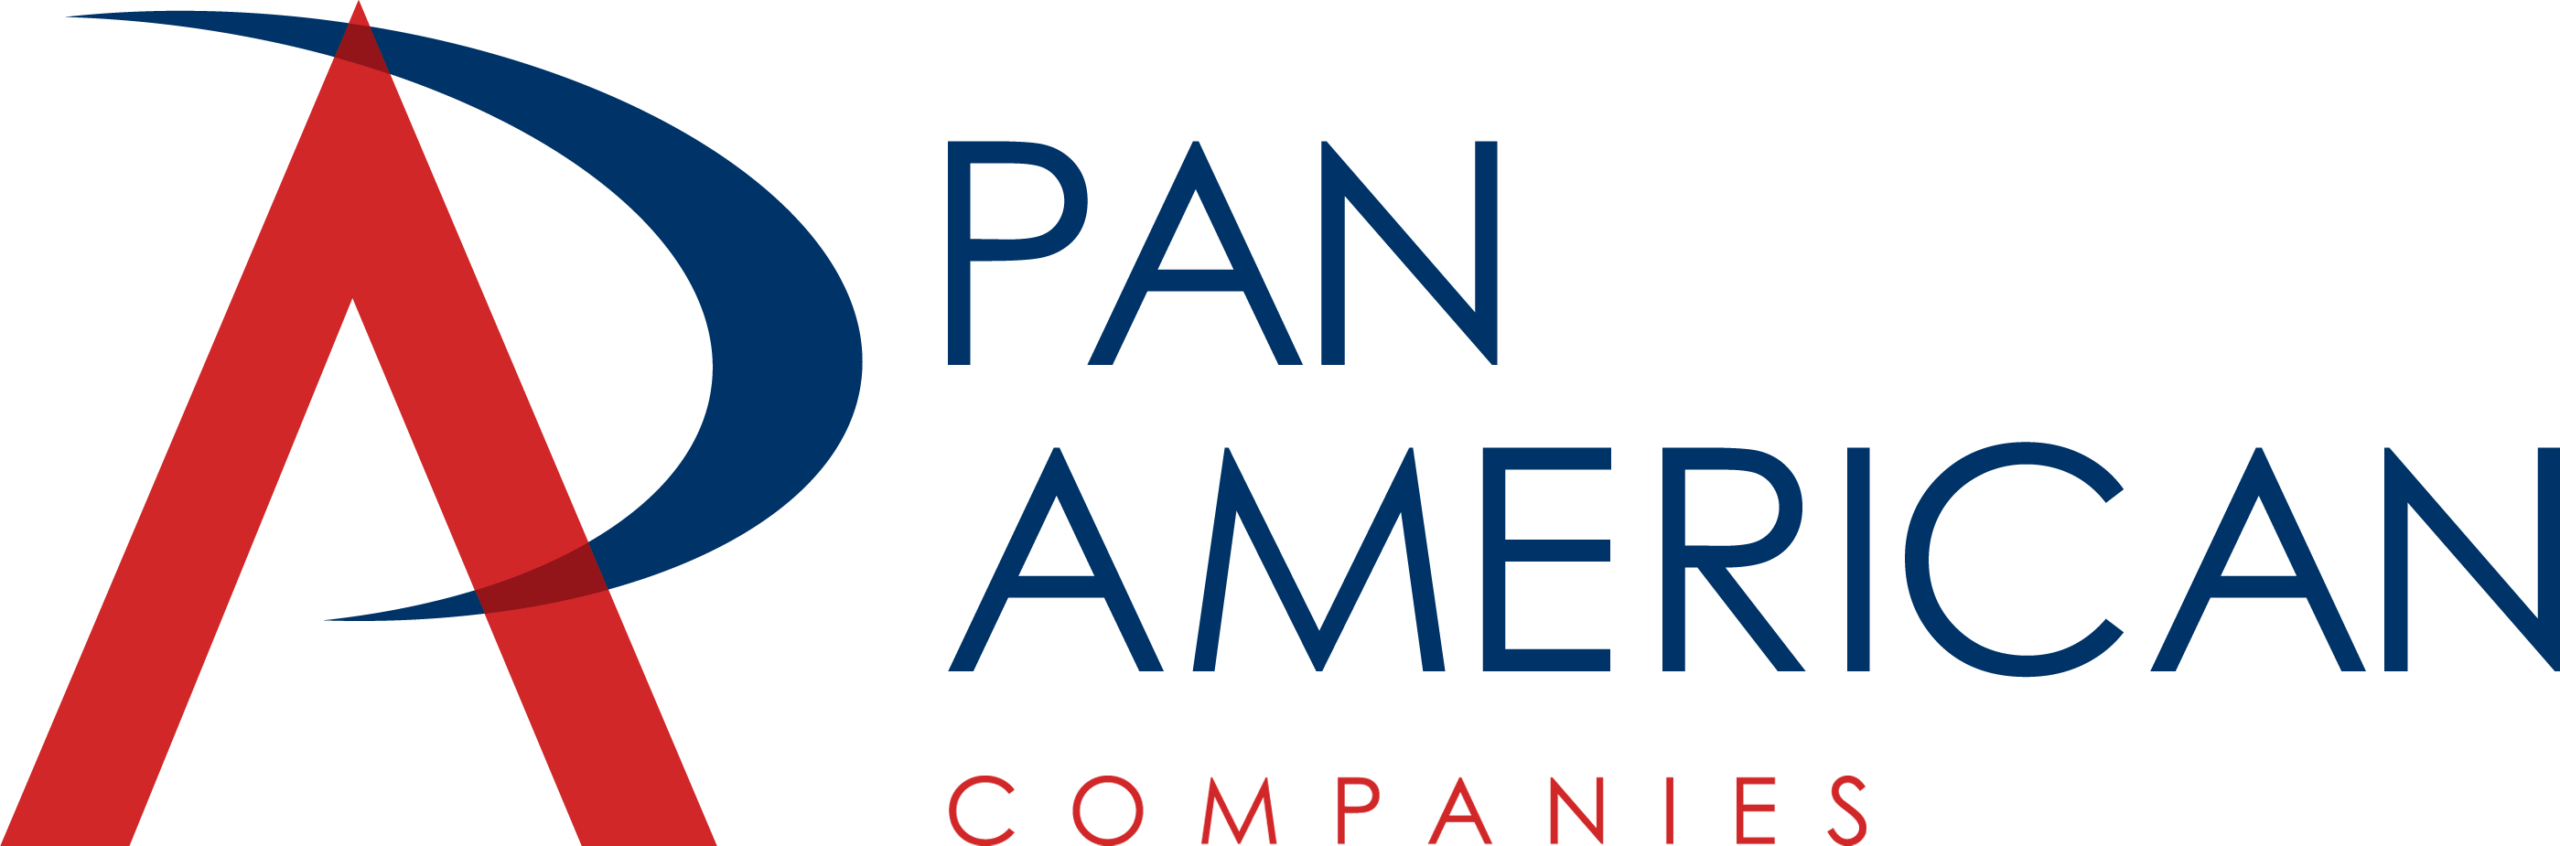 Pan American Companies logo | Speculative distribution facility construction in Jacksonville Florida | ARCO Design Build